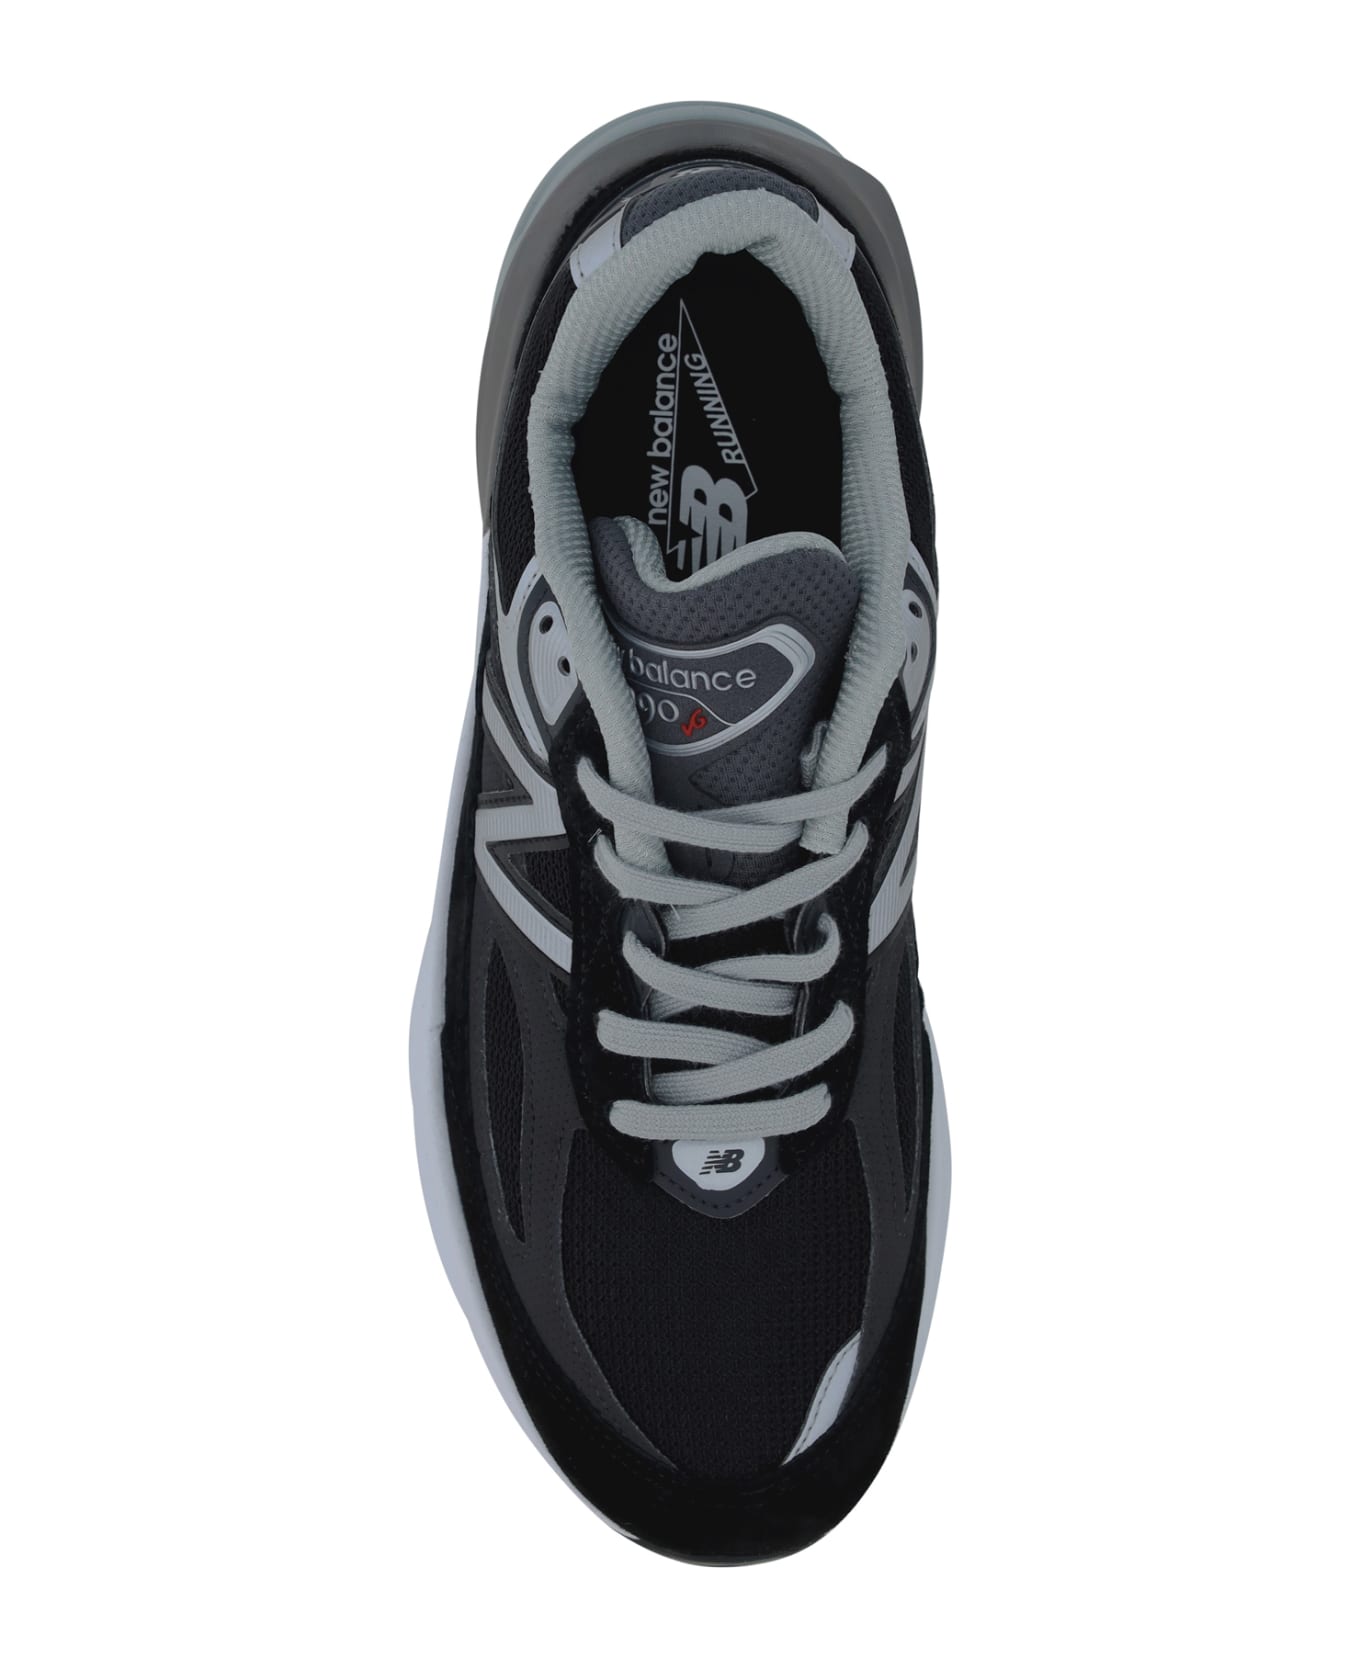 New Balance M990bk6 Sneakers - Black スニーカー